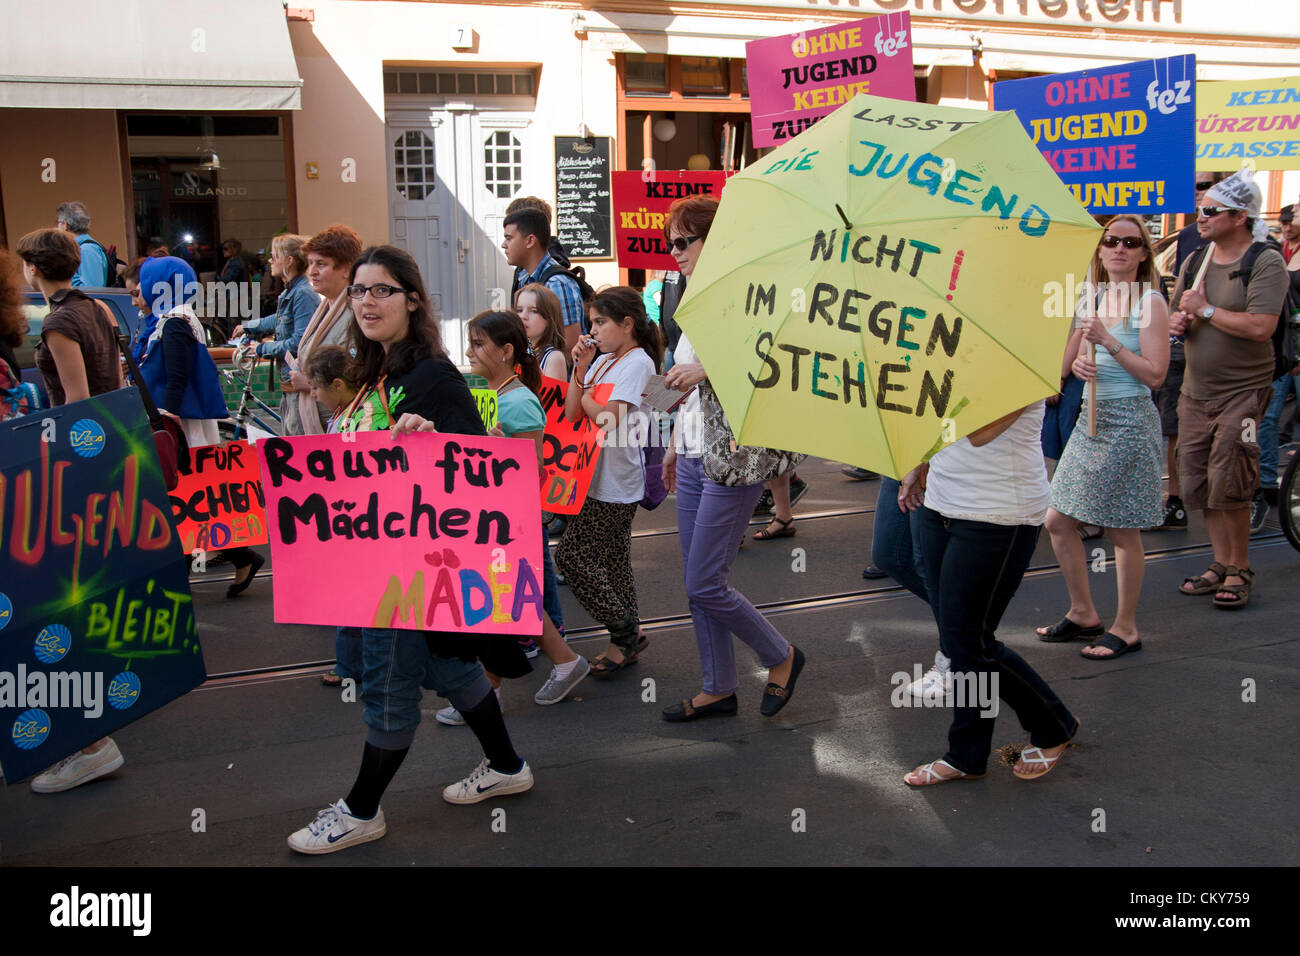 Samstag 1. Sept. Berlin, Deutschland. Demonstration gegen Kürzungen Jugendhilfe protestieren. Demonstranten halten Banner. Stockfoto